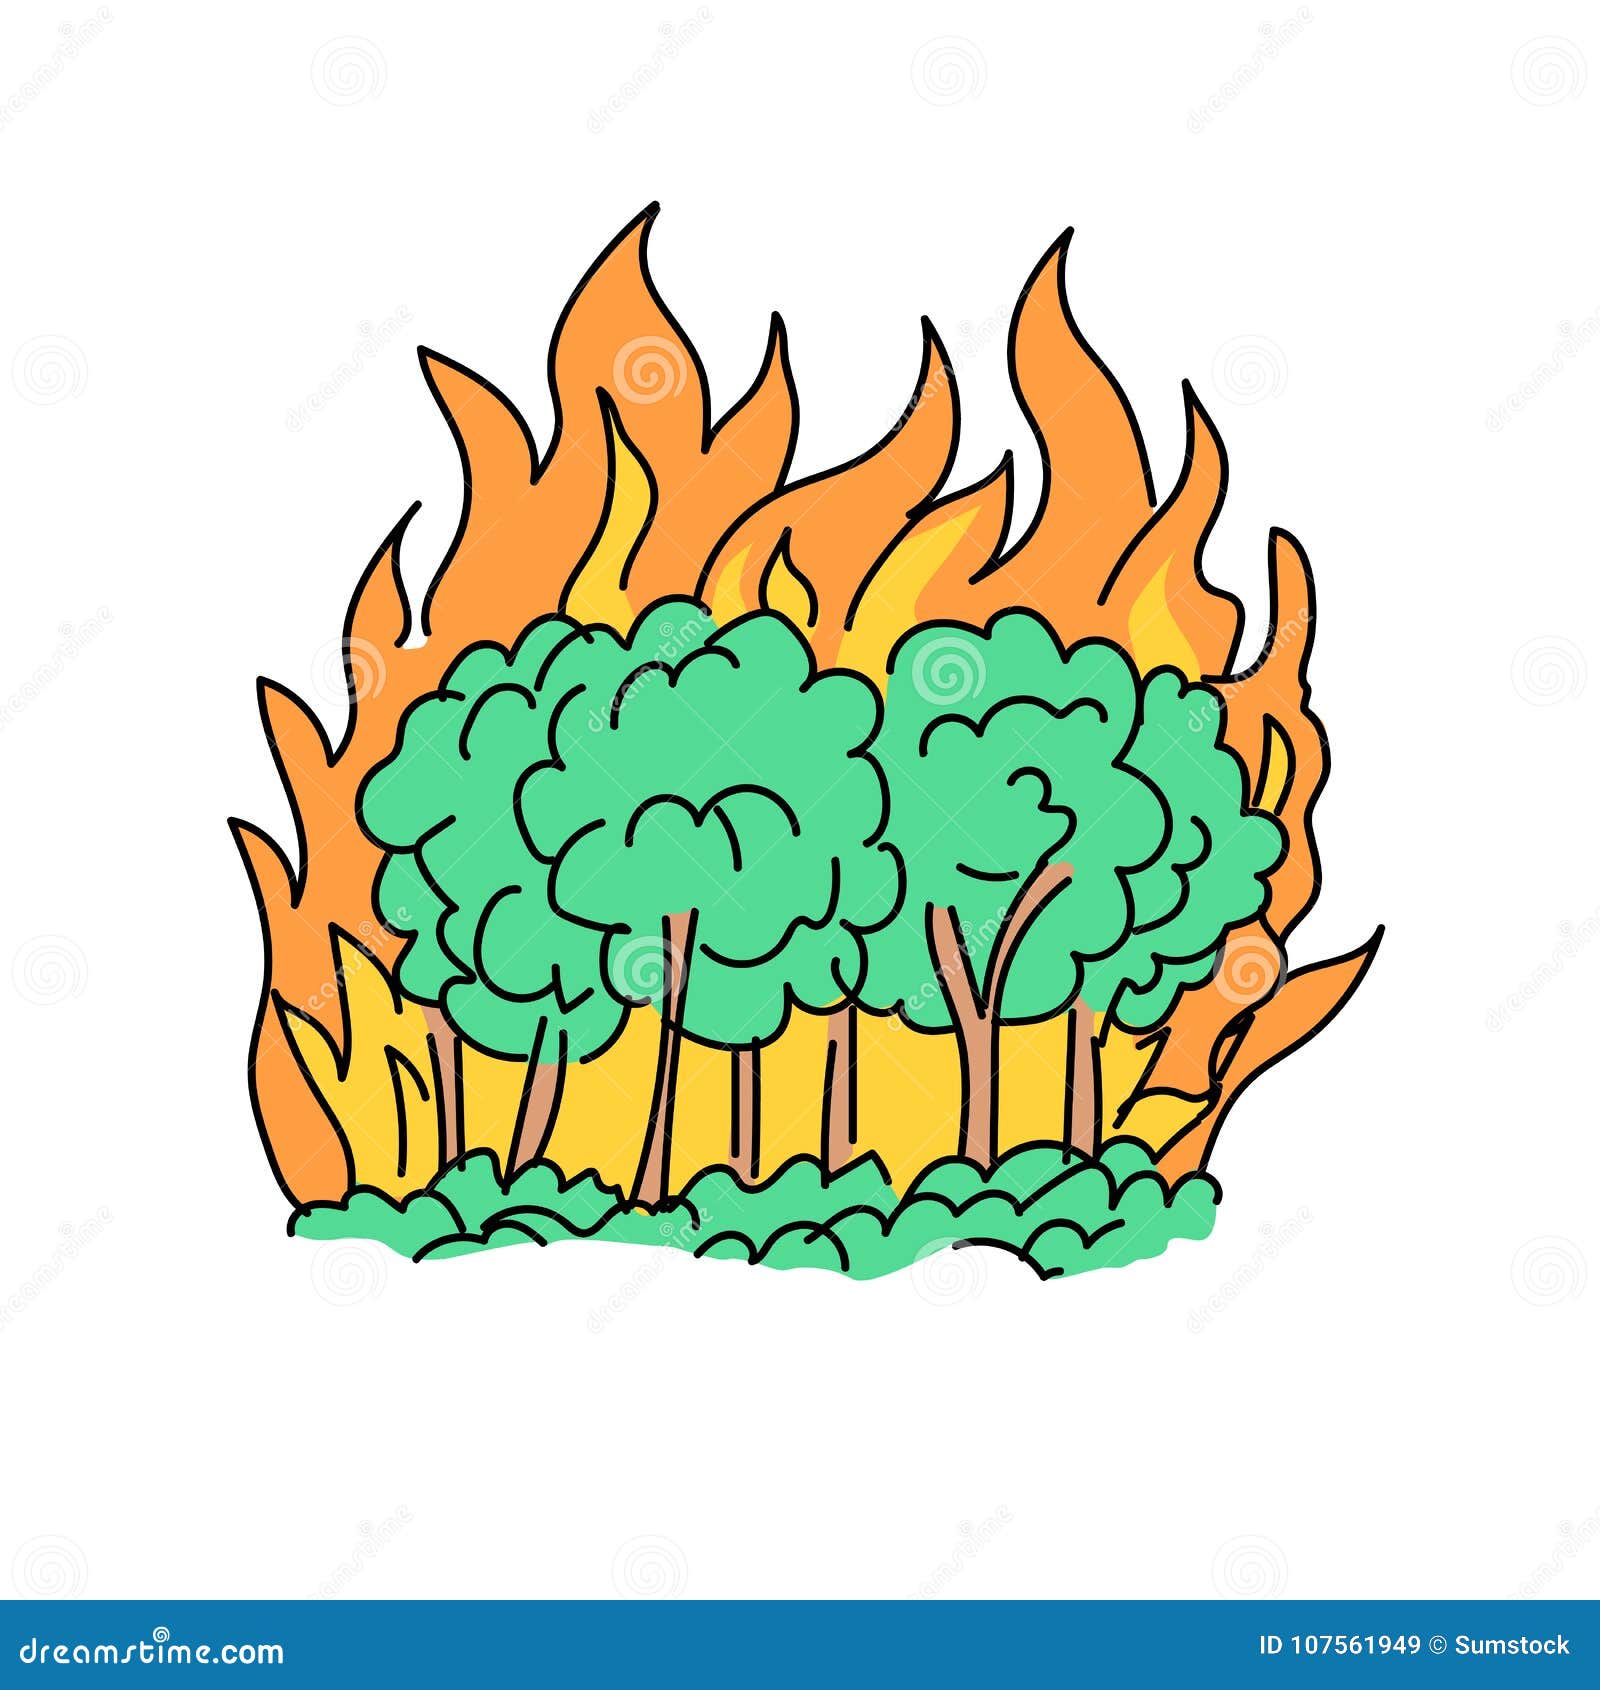 dibujo-del-concepto-desastre-natural-incendio-forestal-107561949.jpg